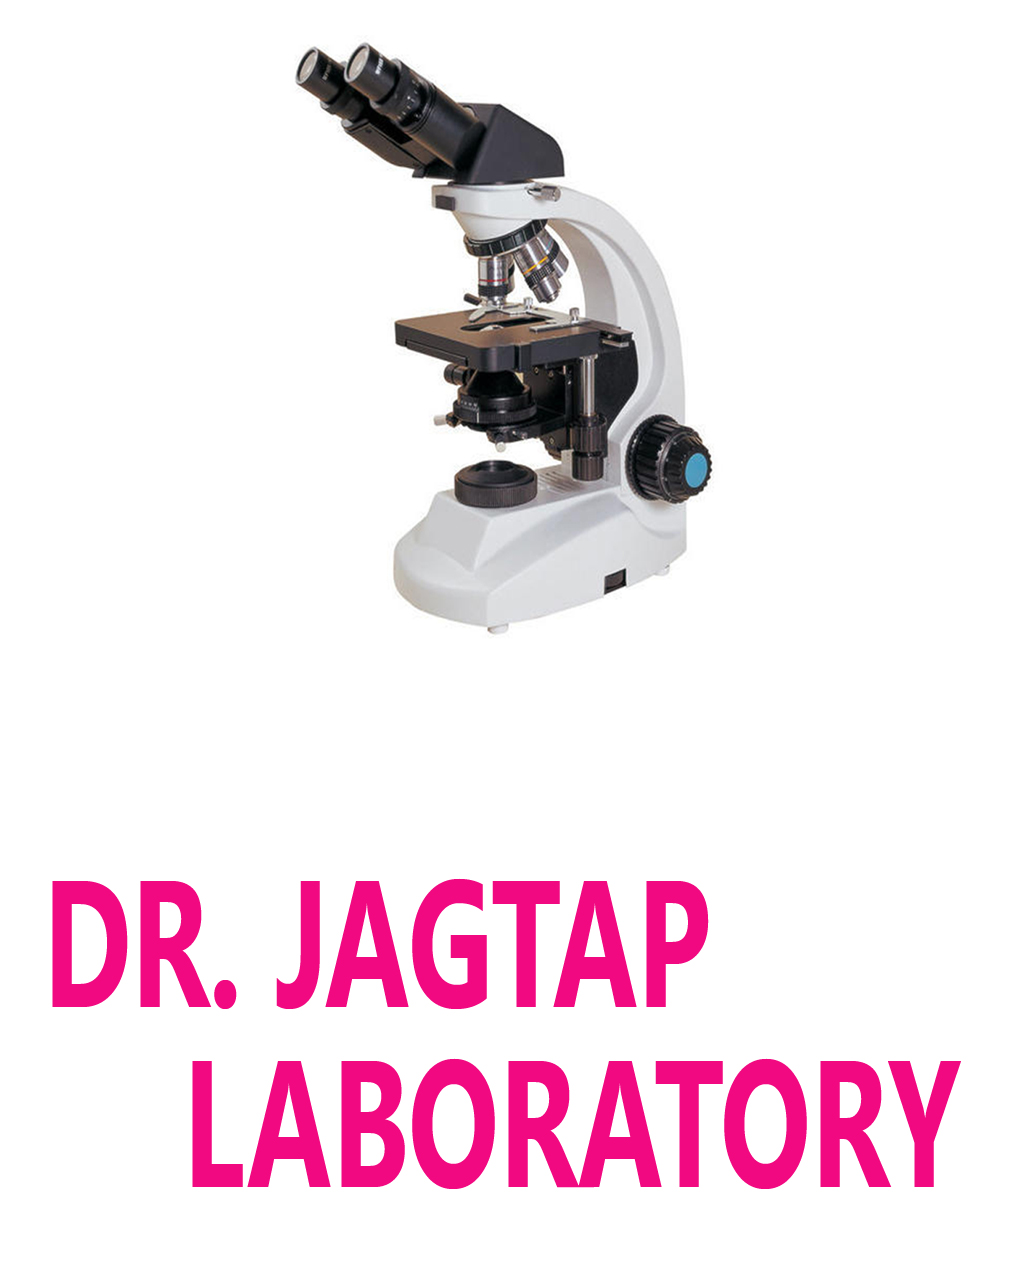 DR. JAGTAP LABORATORY | SolapurMall.com